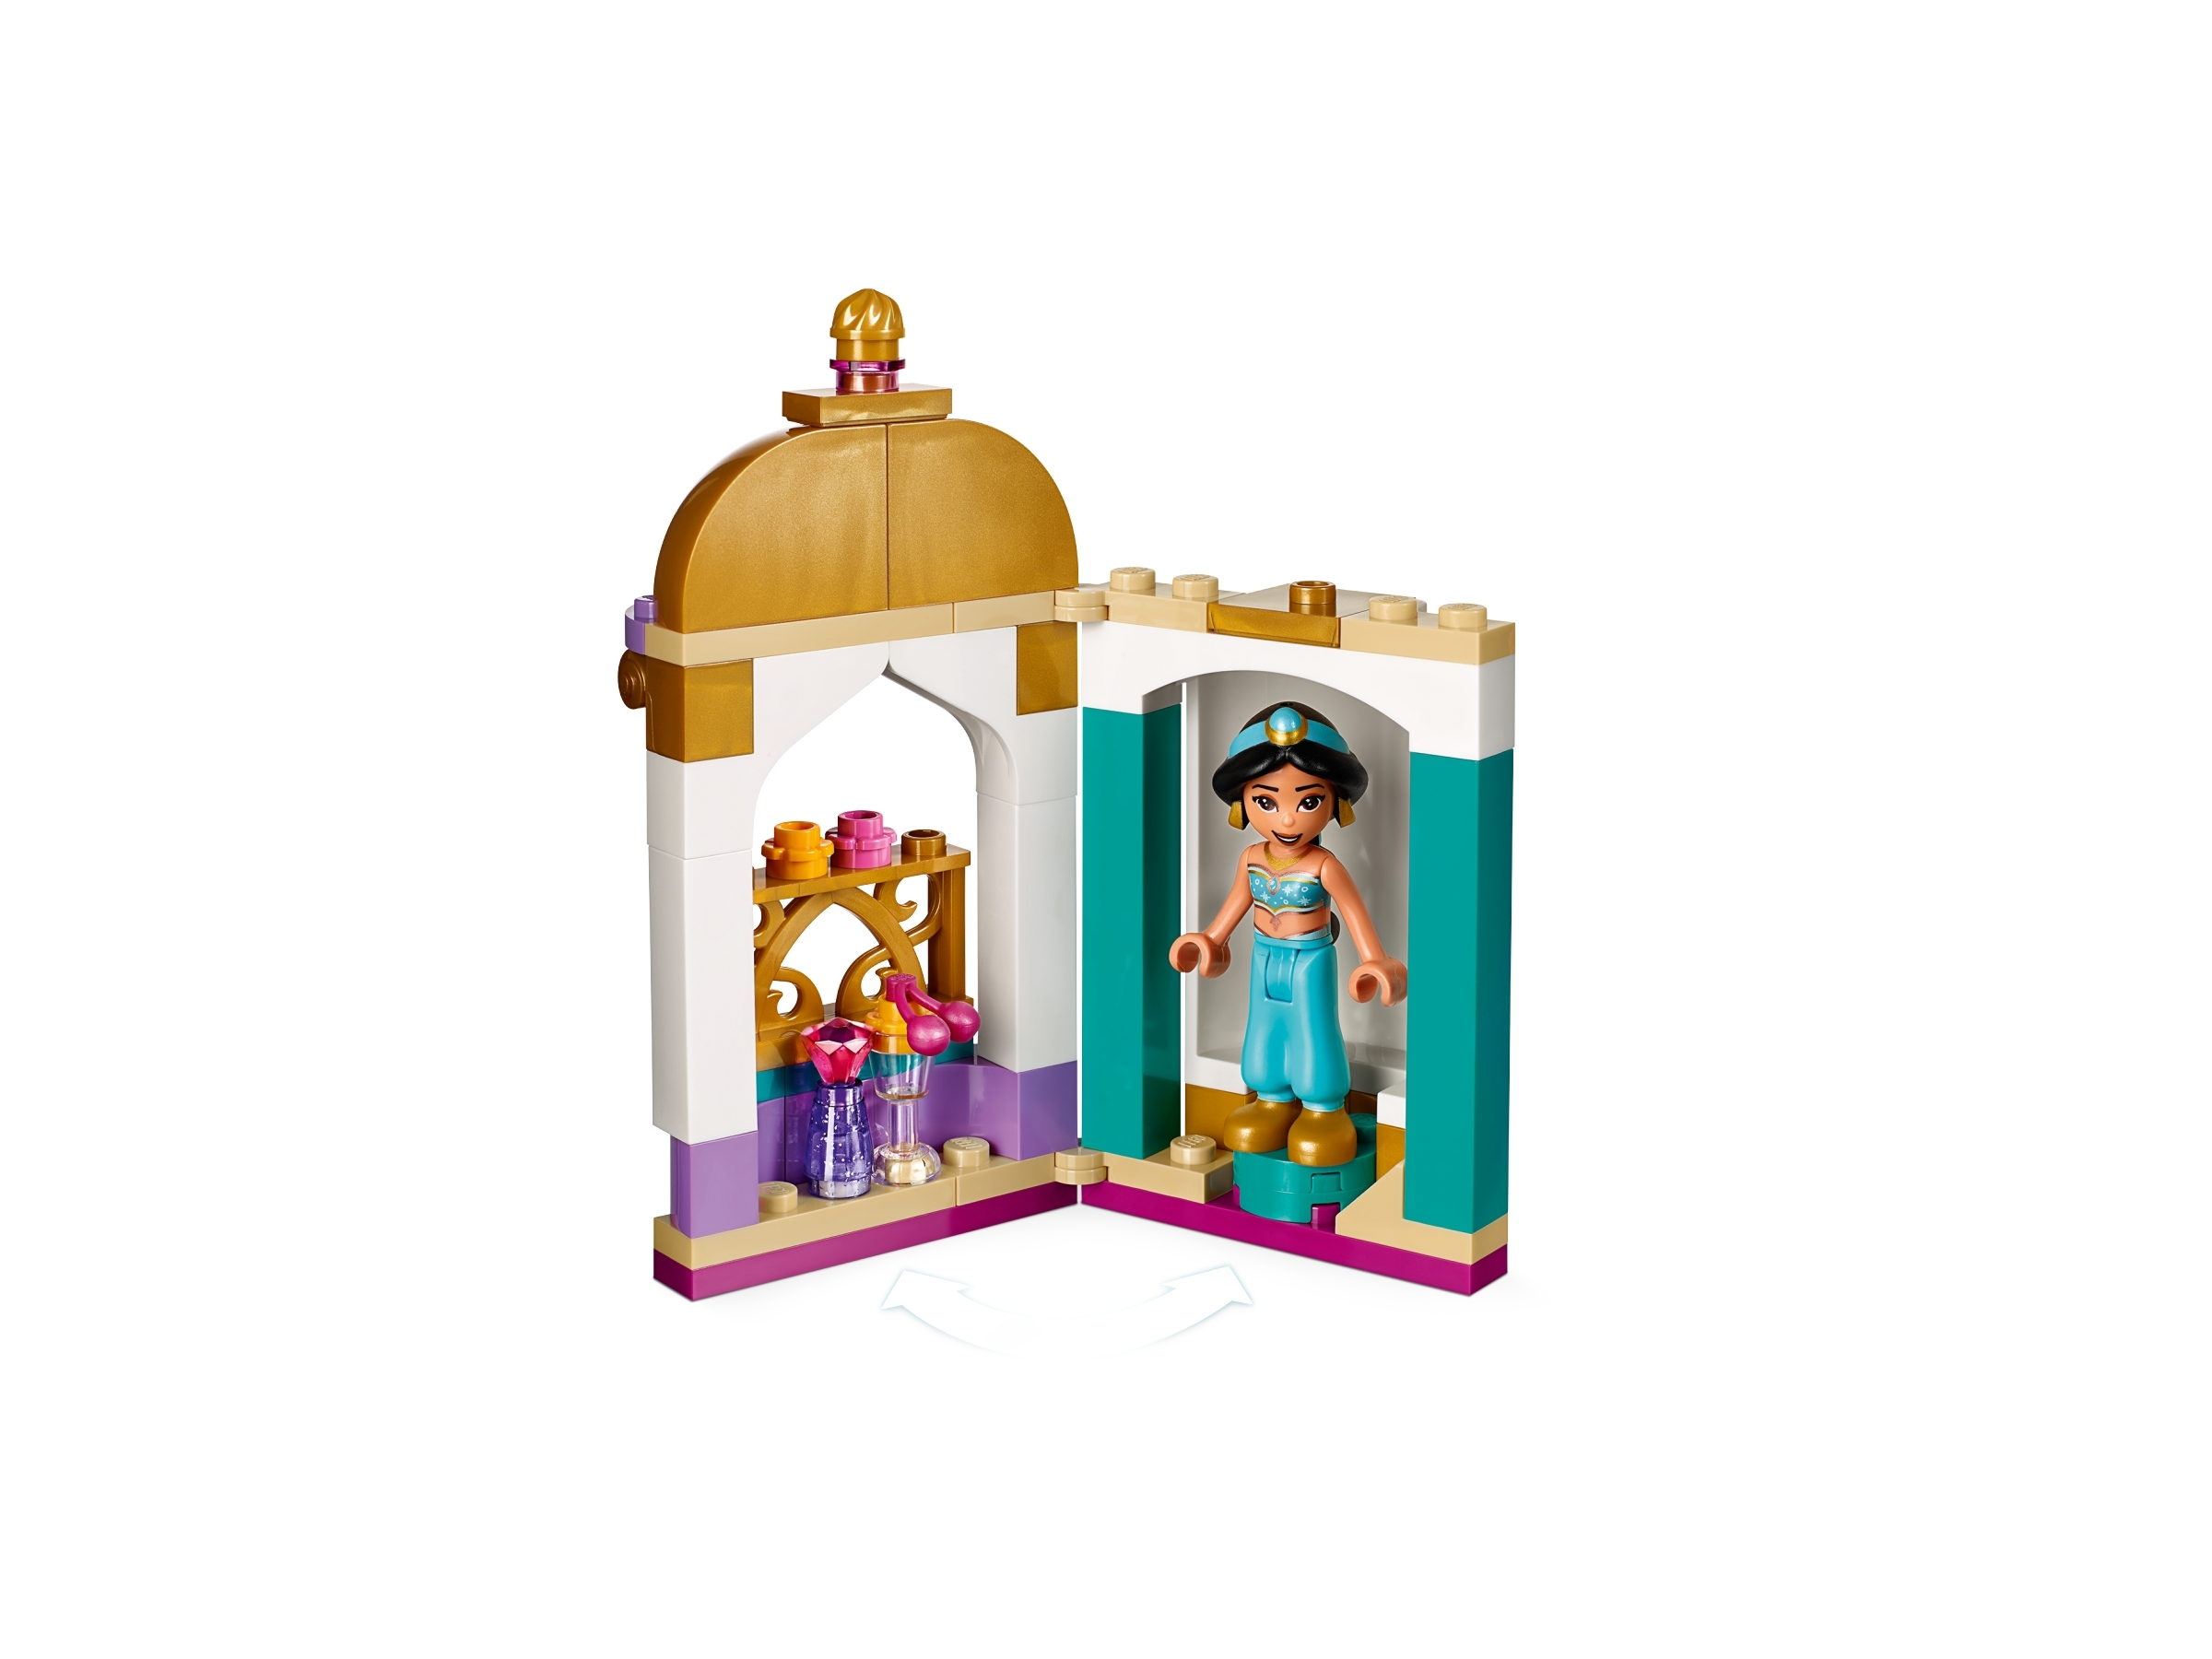 LEGO Disney Princess 41158 Jasmine's Petite Tower 49pcs 2019 for sale online 